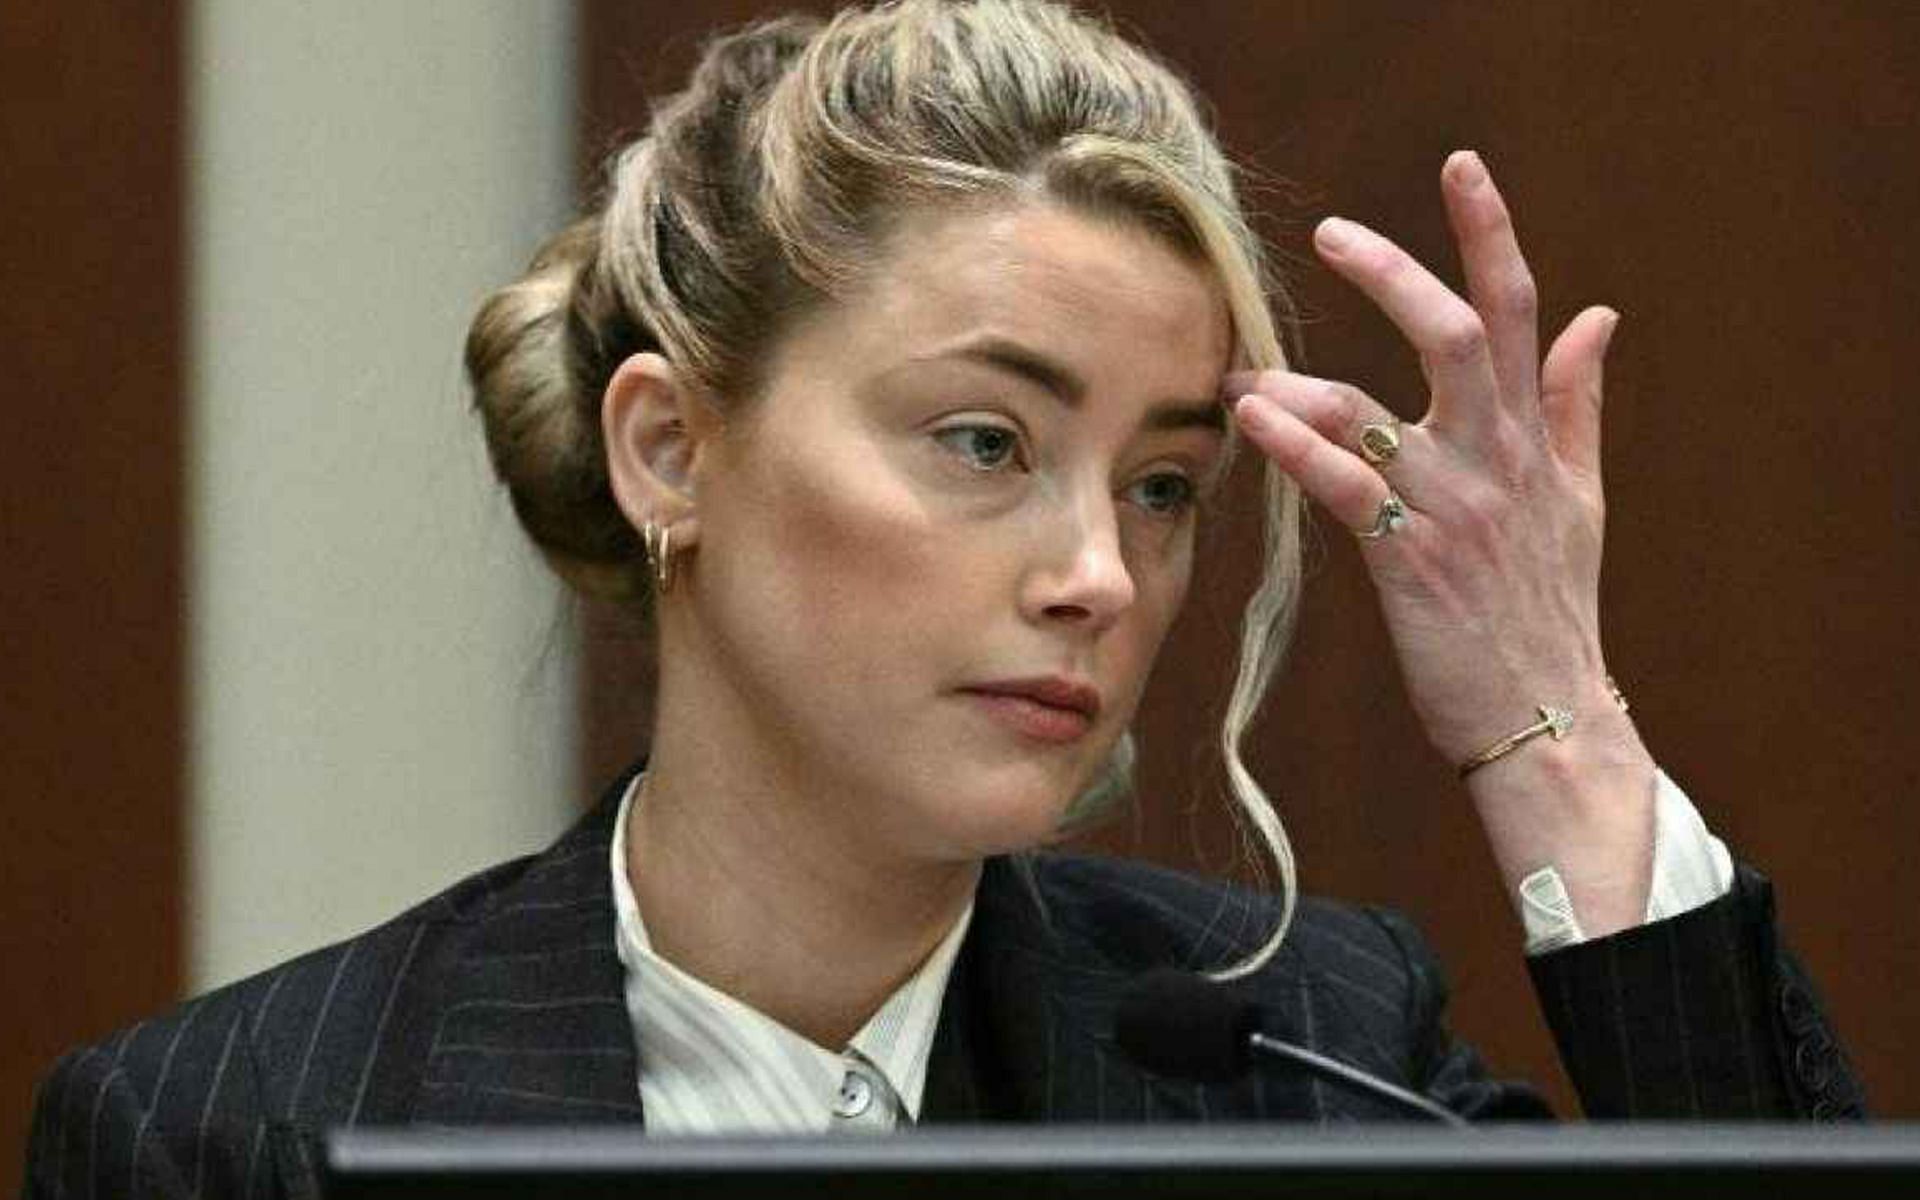 A still of Amber Heard from the trial (Image via CNN)